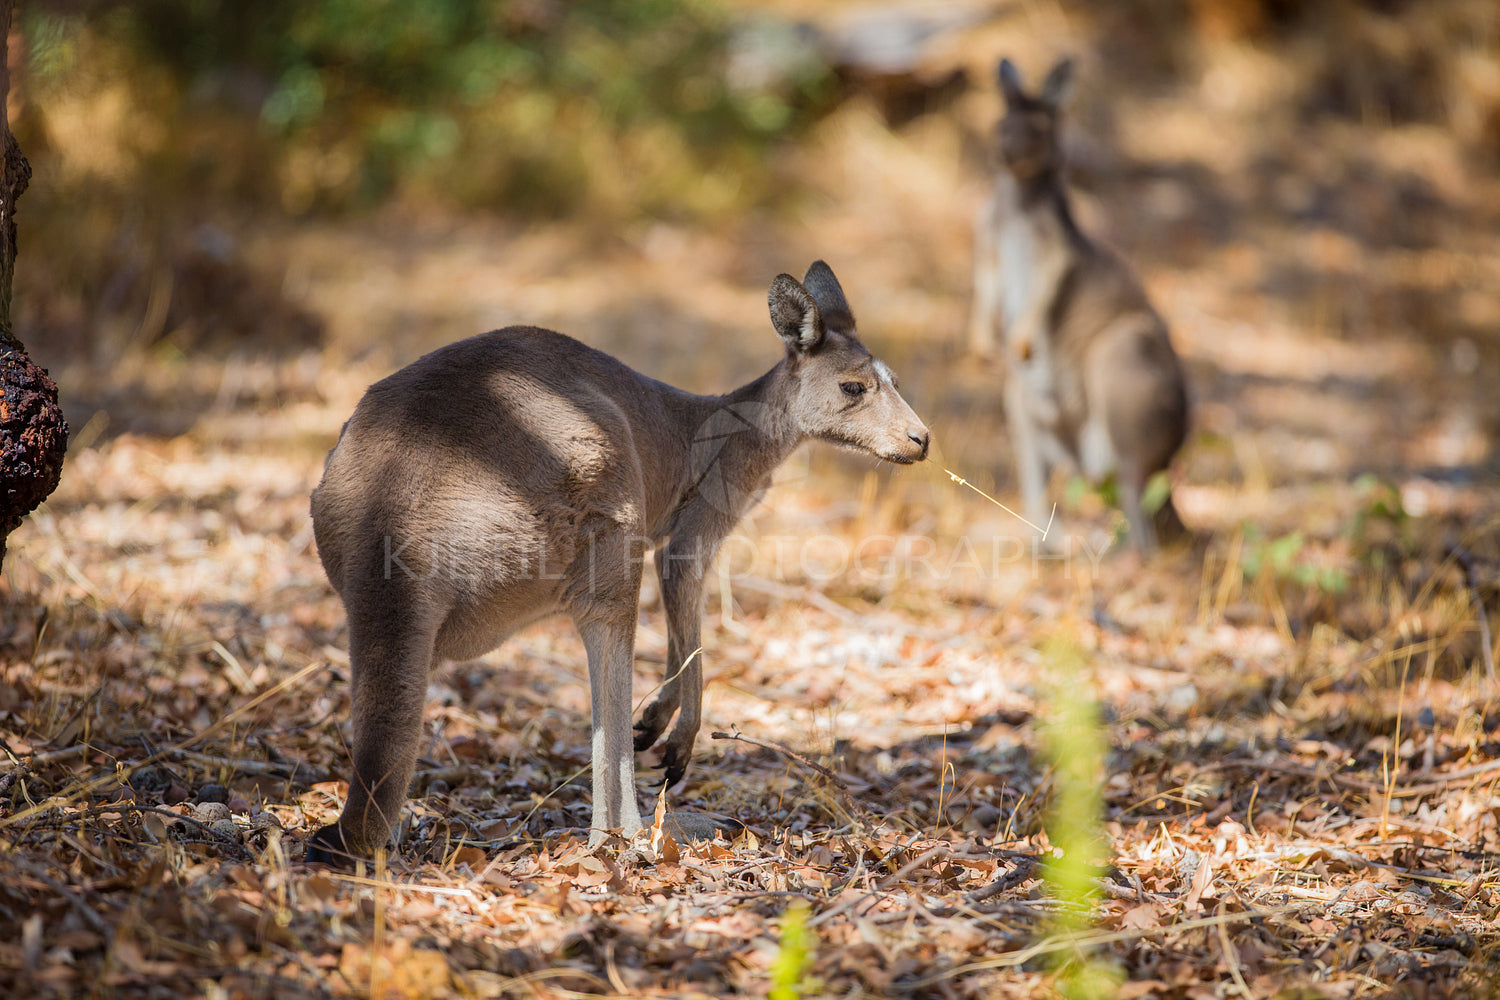 Kangaroo eating in woods